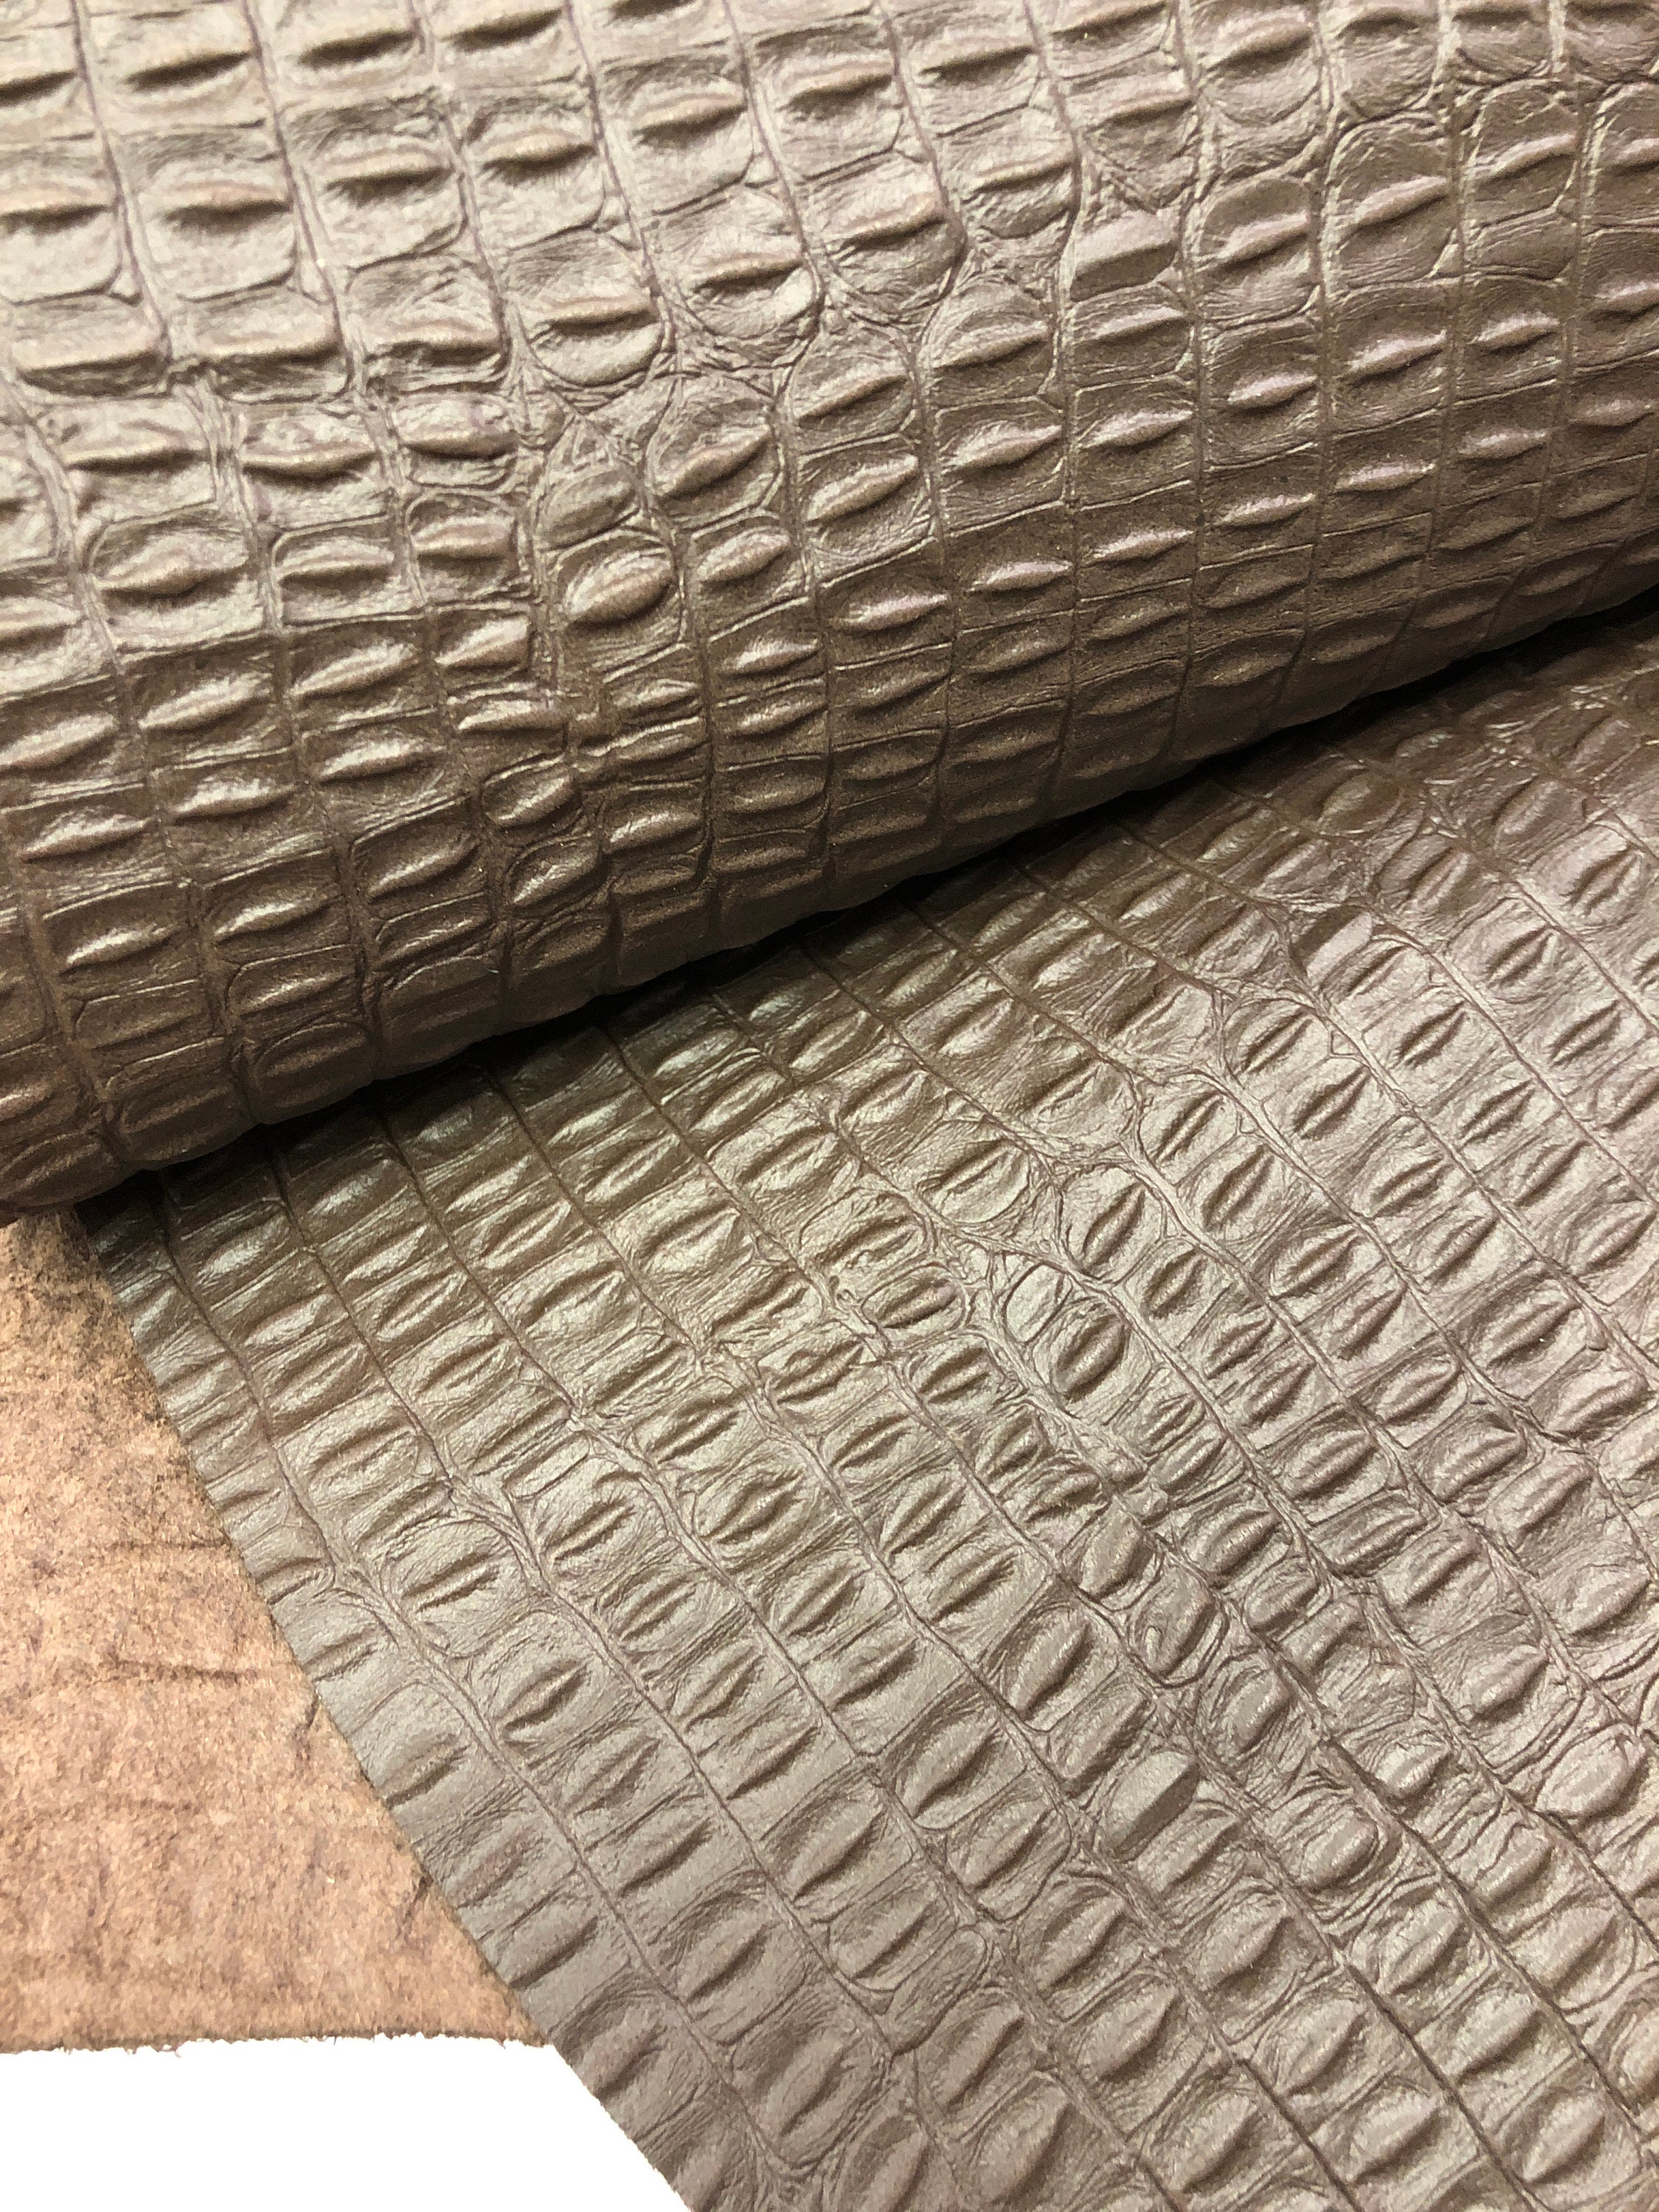 Italian Hornback Croc Embossed Calfskin Leather Billfold Wallet - Brown